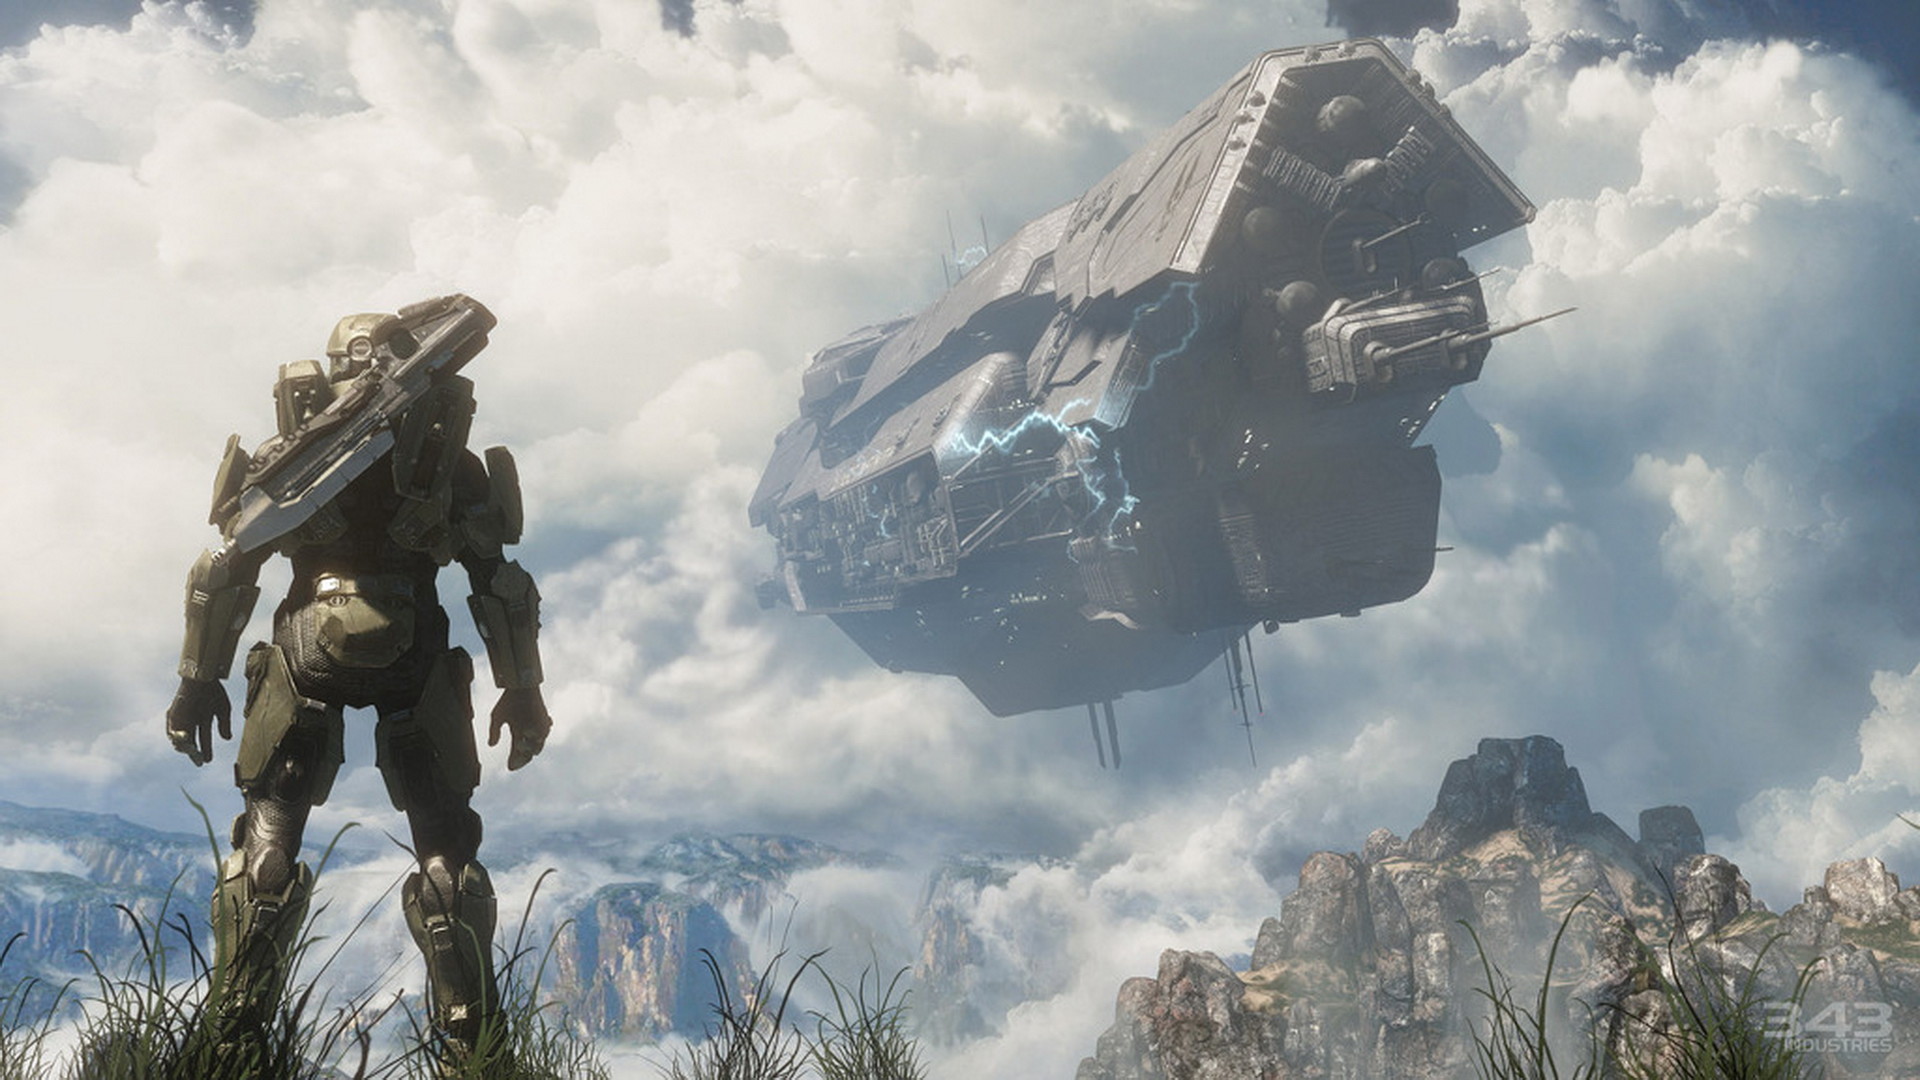 Halo 4 – Master Chief Spartan – UNSC ship crashing